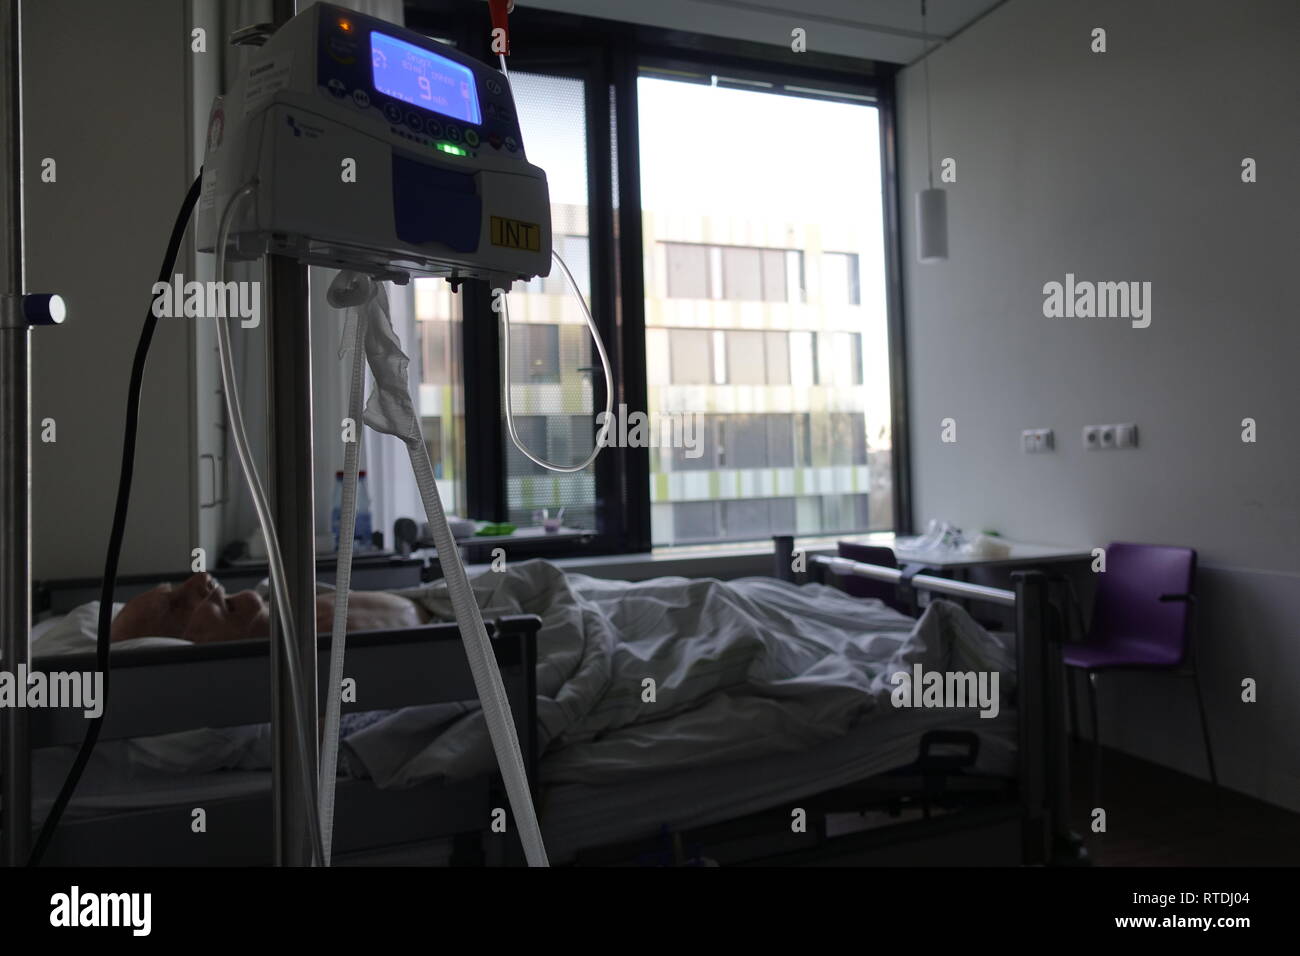 Paciente en Krankenhaus,Klinik Siloah,Hannover. Foto de stock